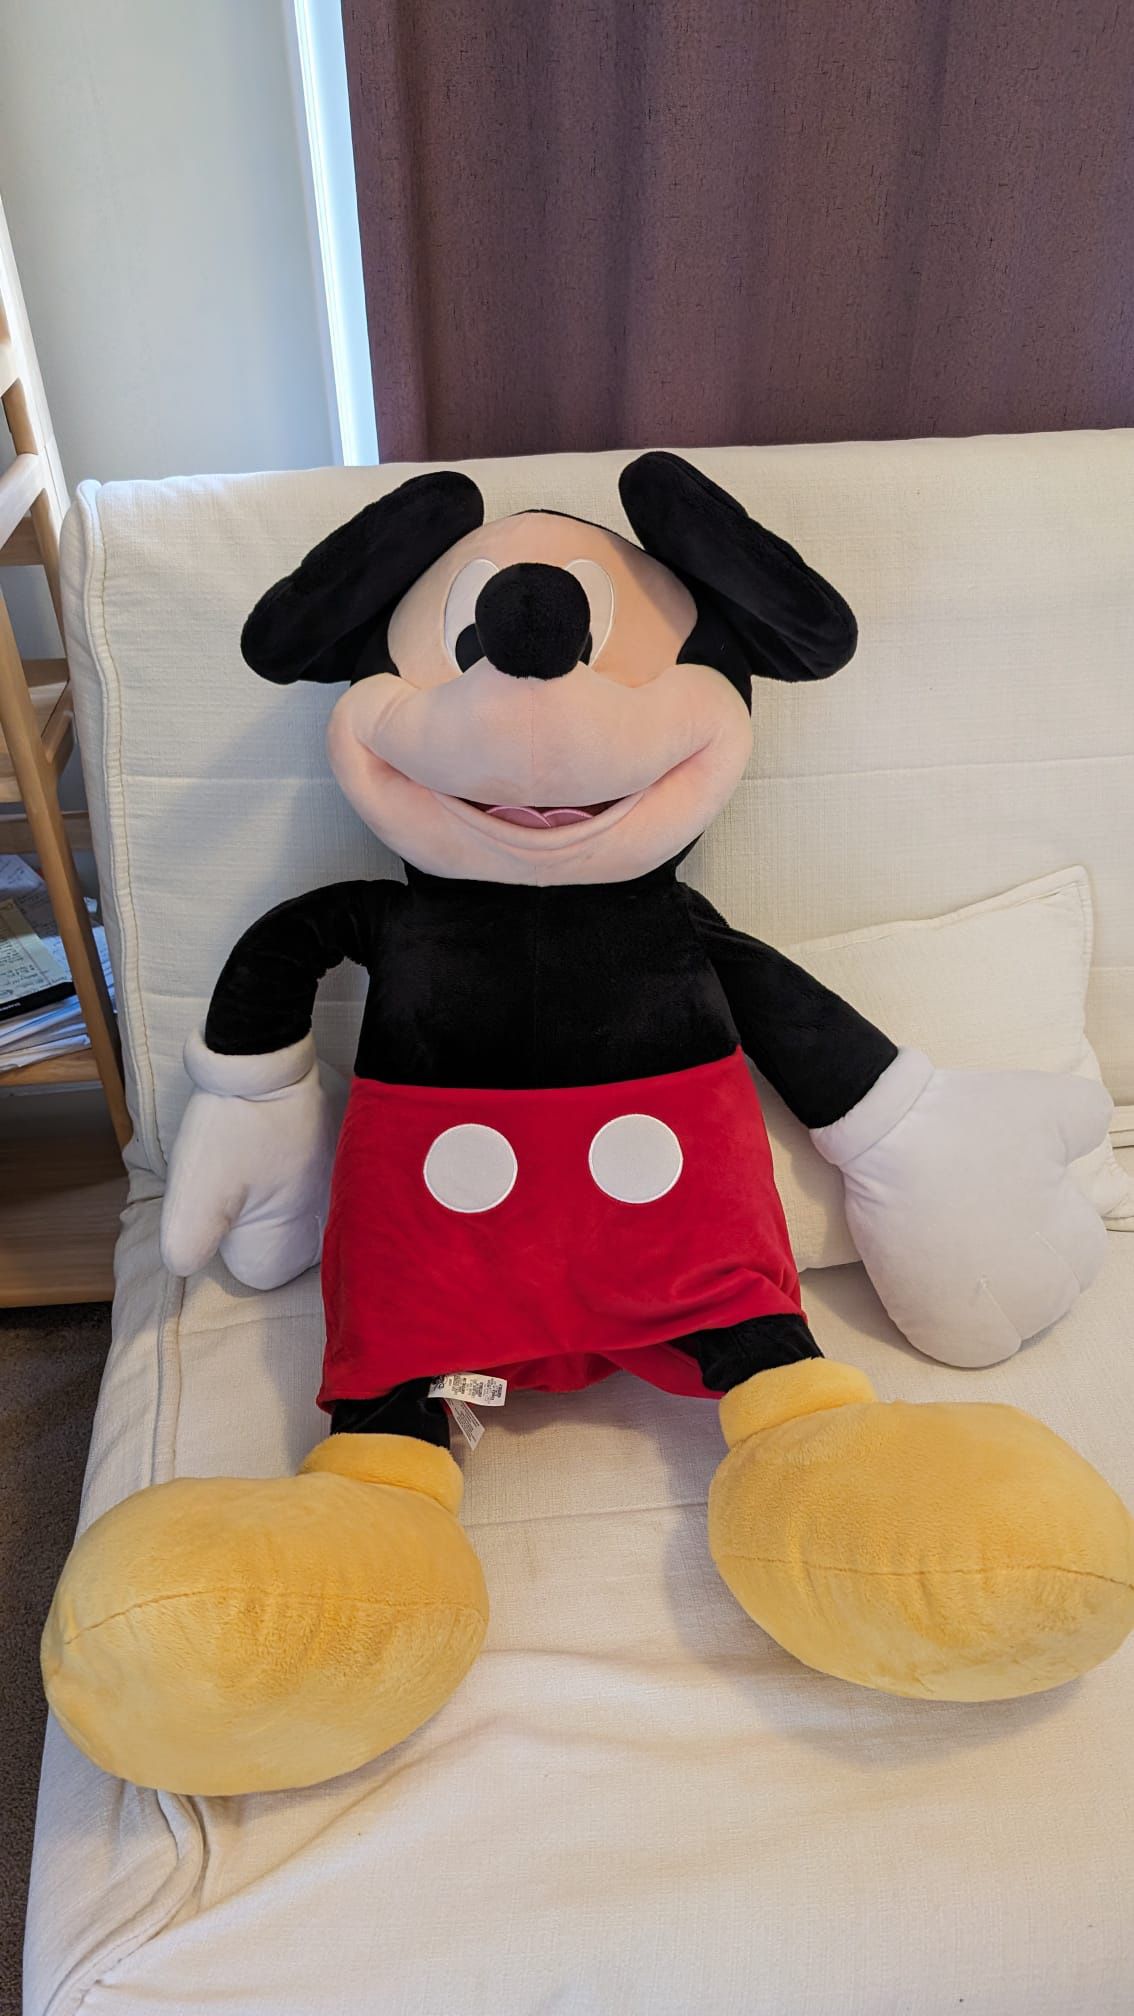 Giant Life size Mickey Mouse Plush